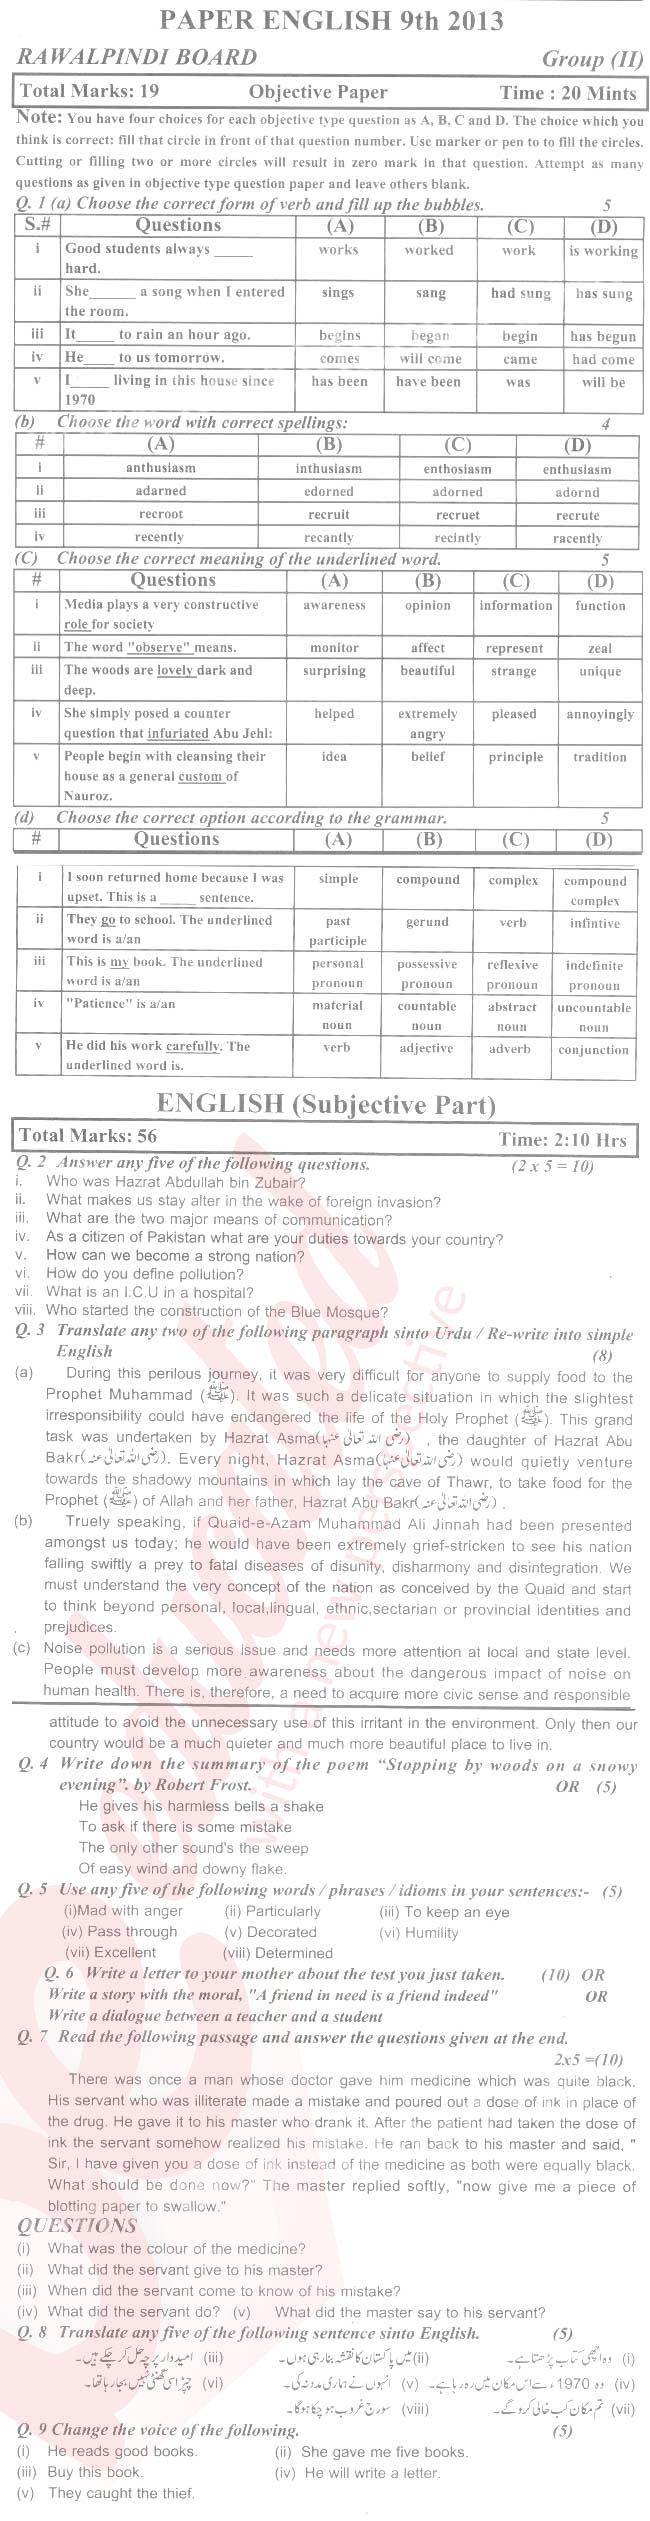 English 9th class Past Paper Group 2 BISE Rawalpindi 2013